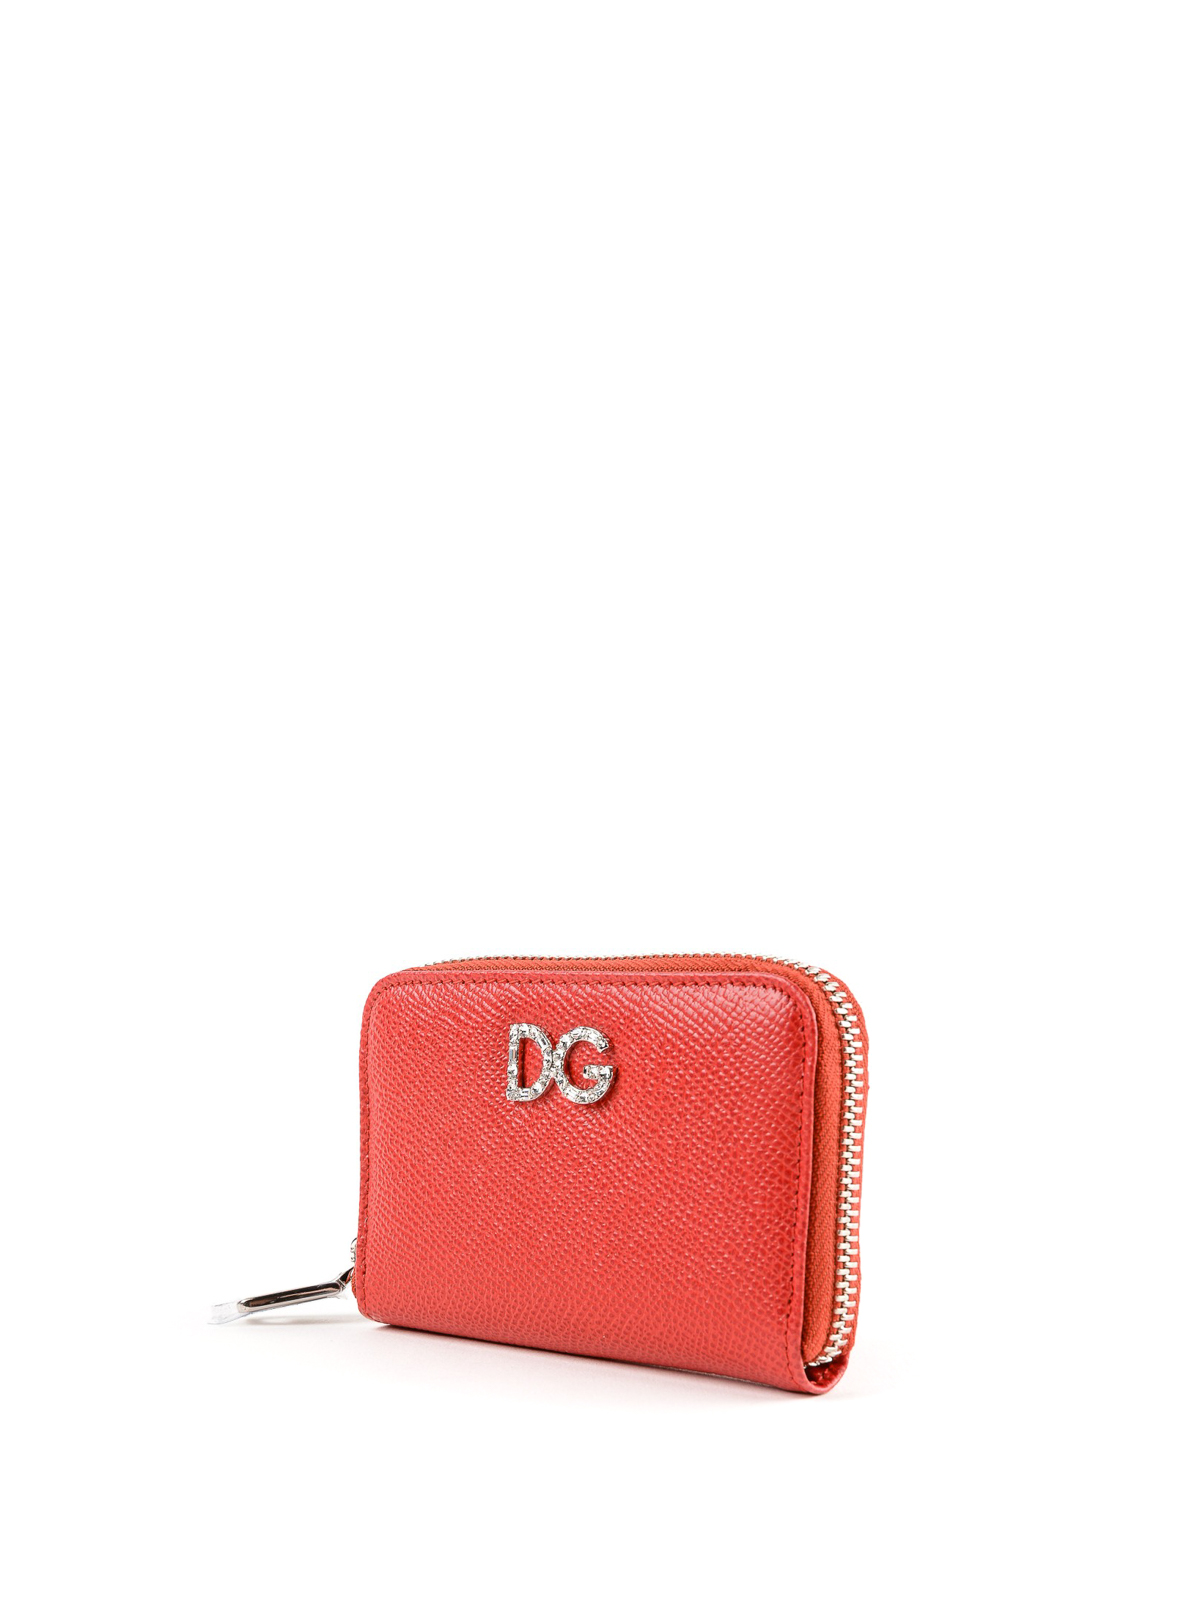 Wallets & purses Dolce & Gabbana - Zip around red small wallet -  BI0460AU77180303